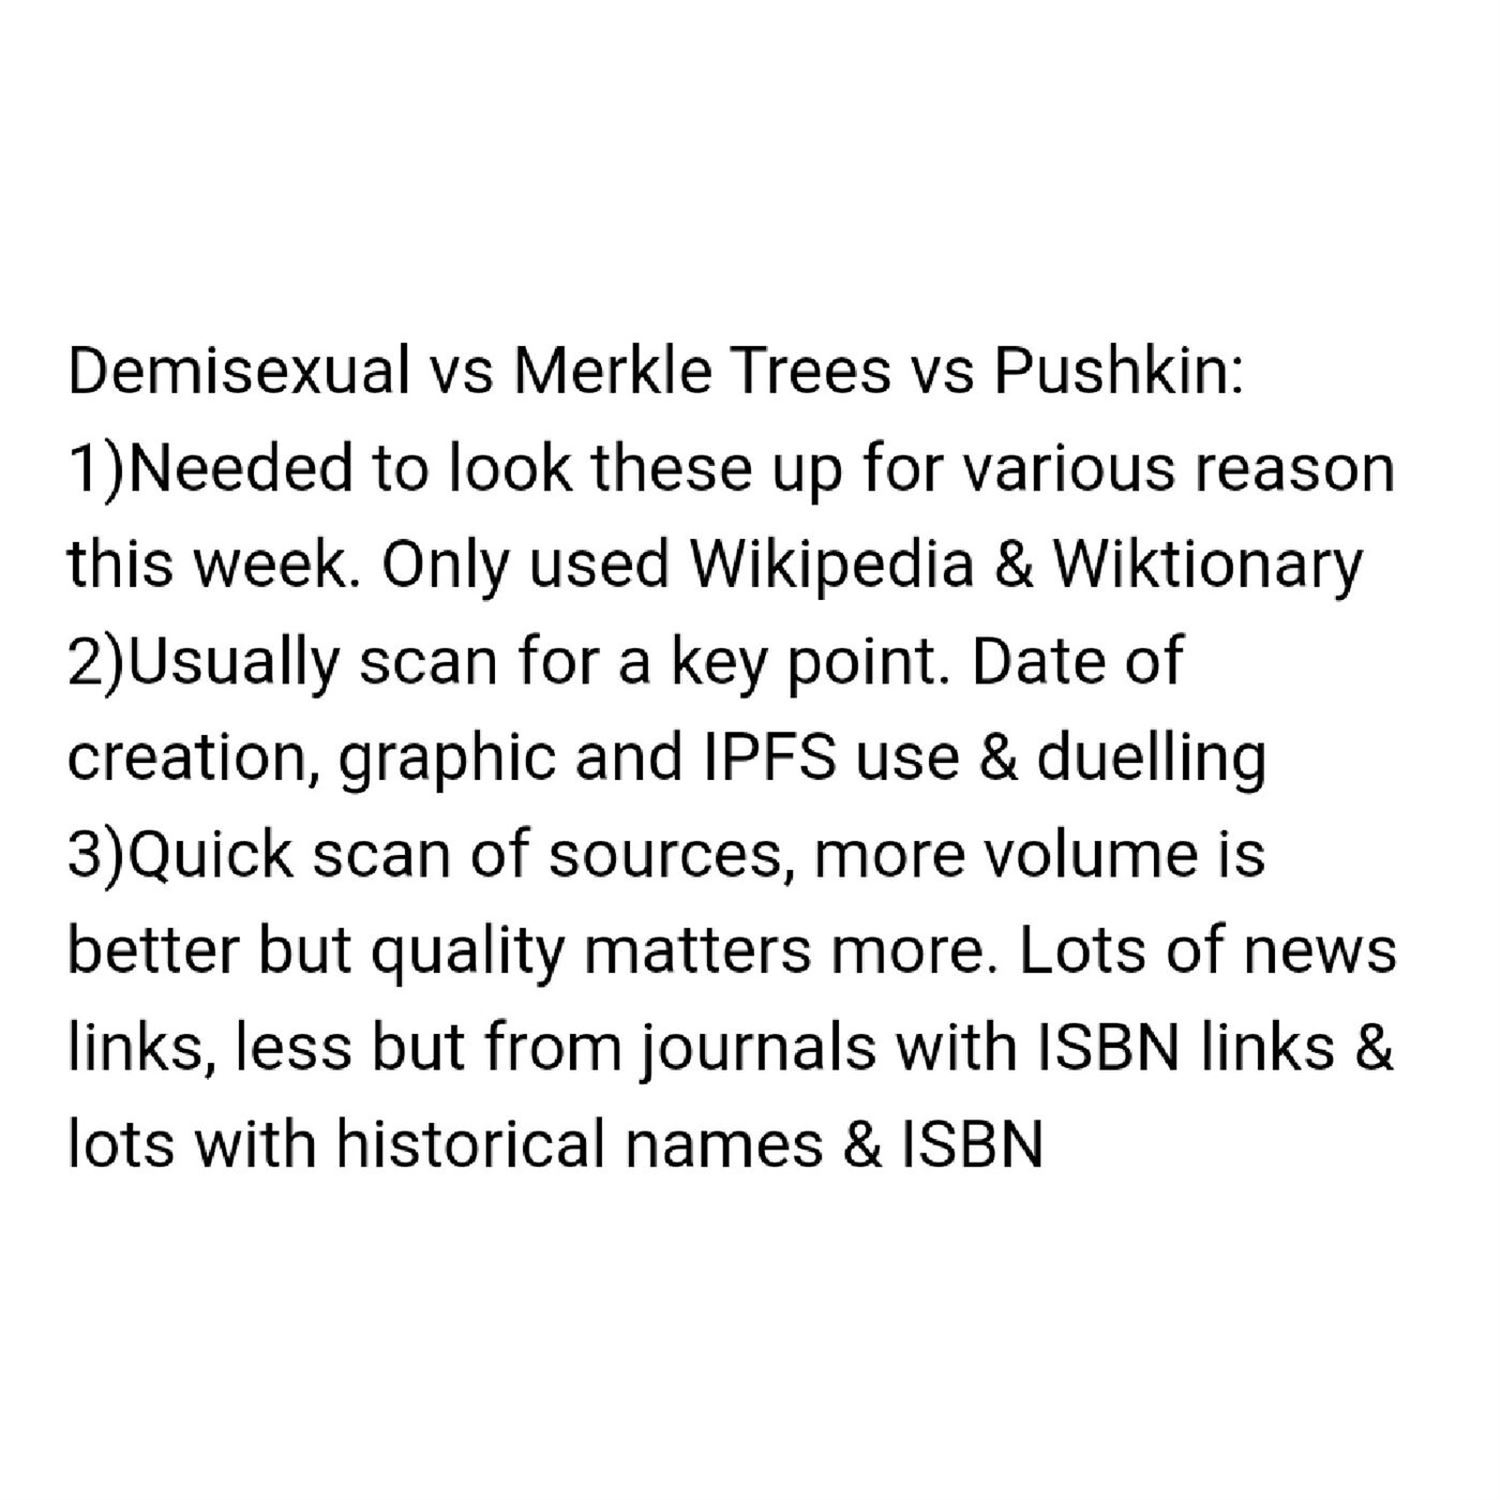 Demisexual, Merkle Trees & Pushkin